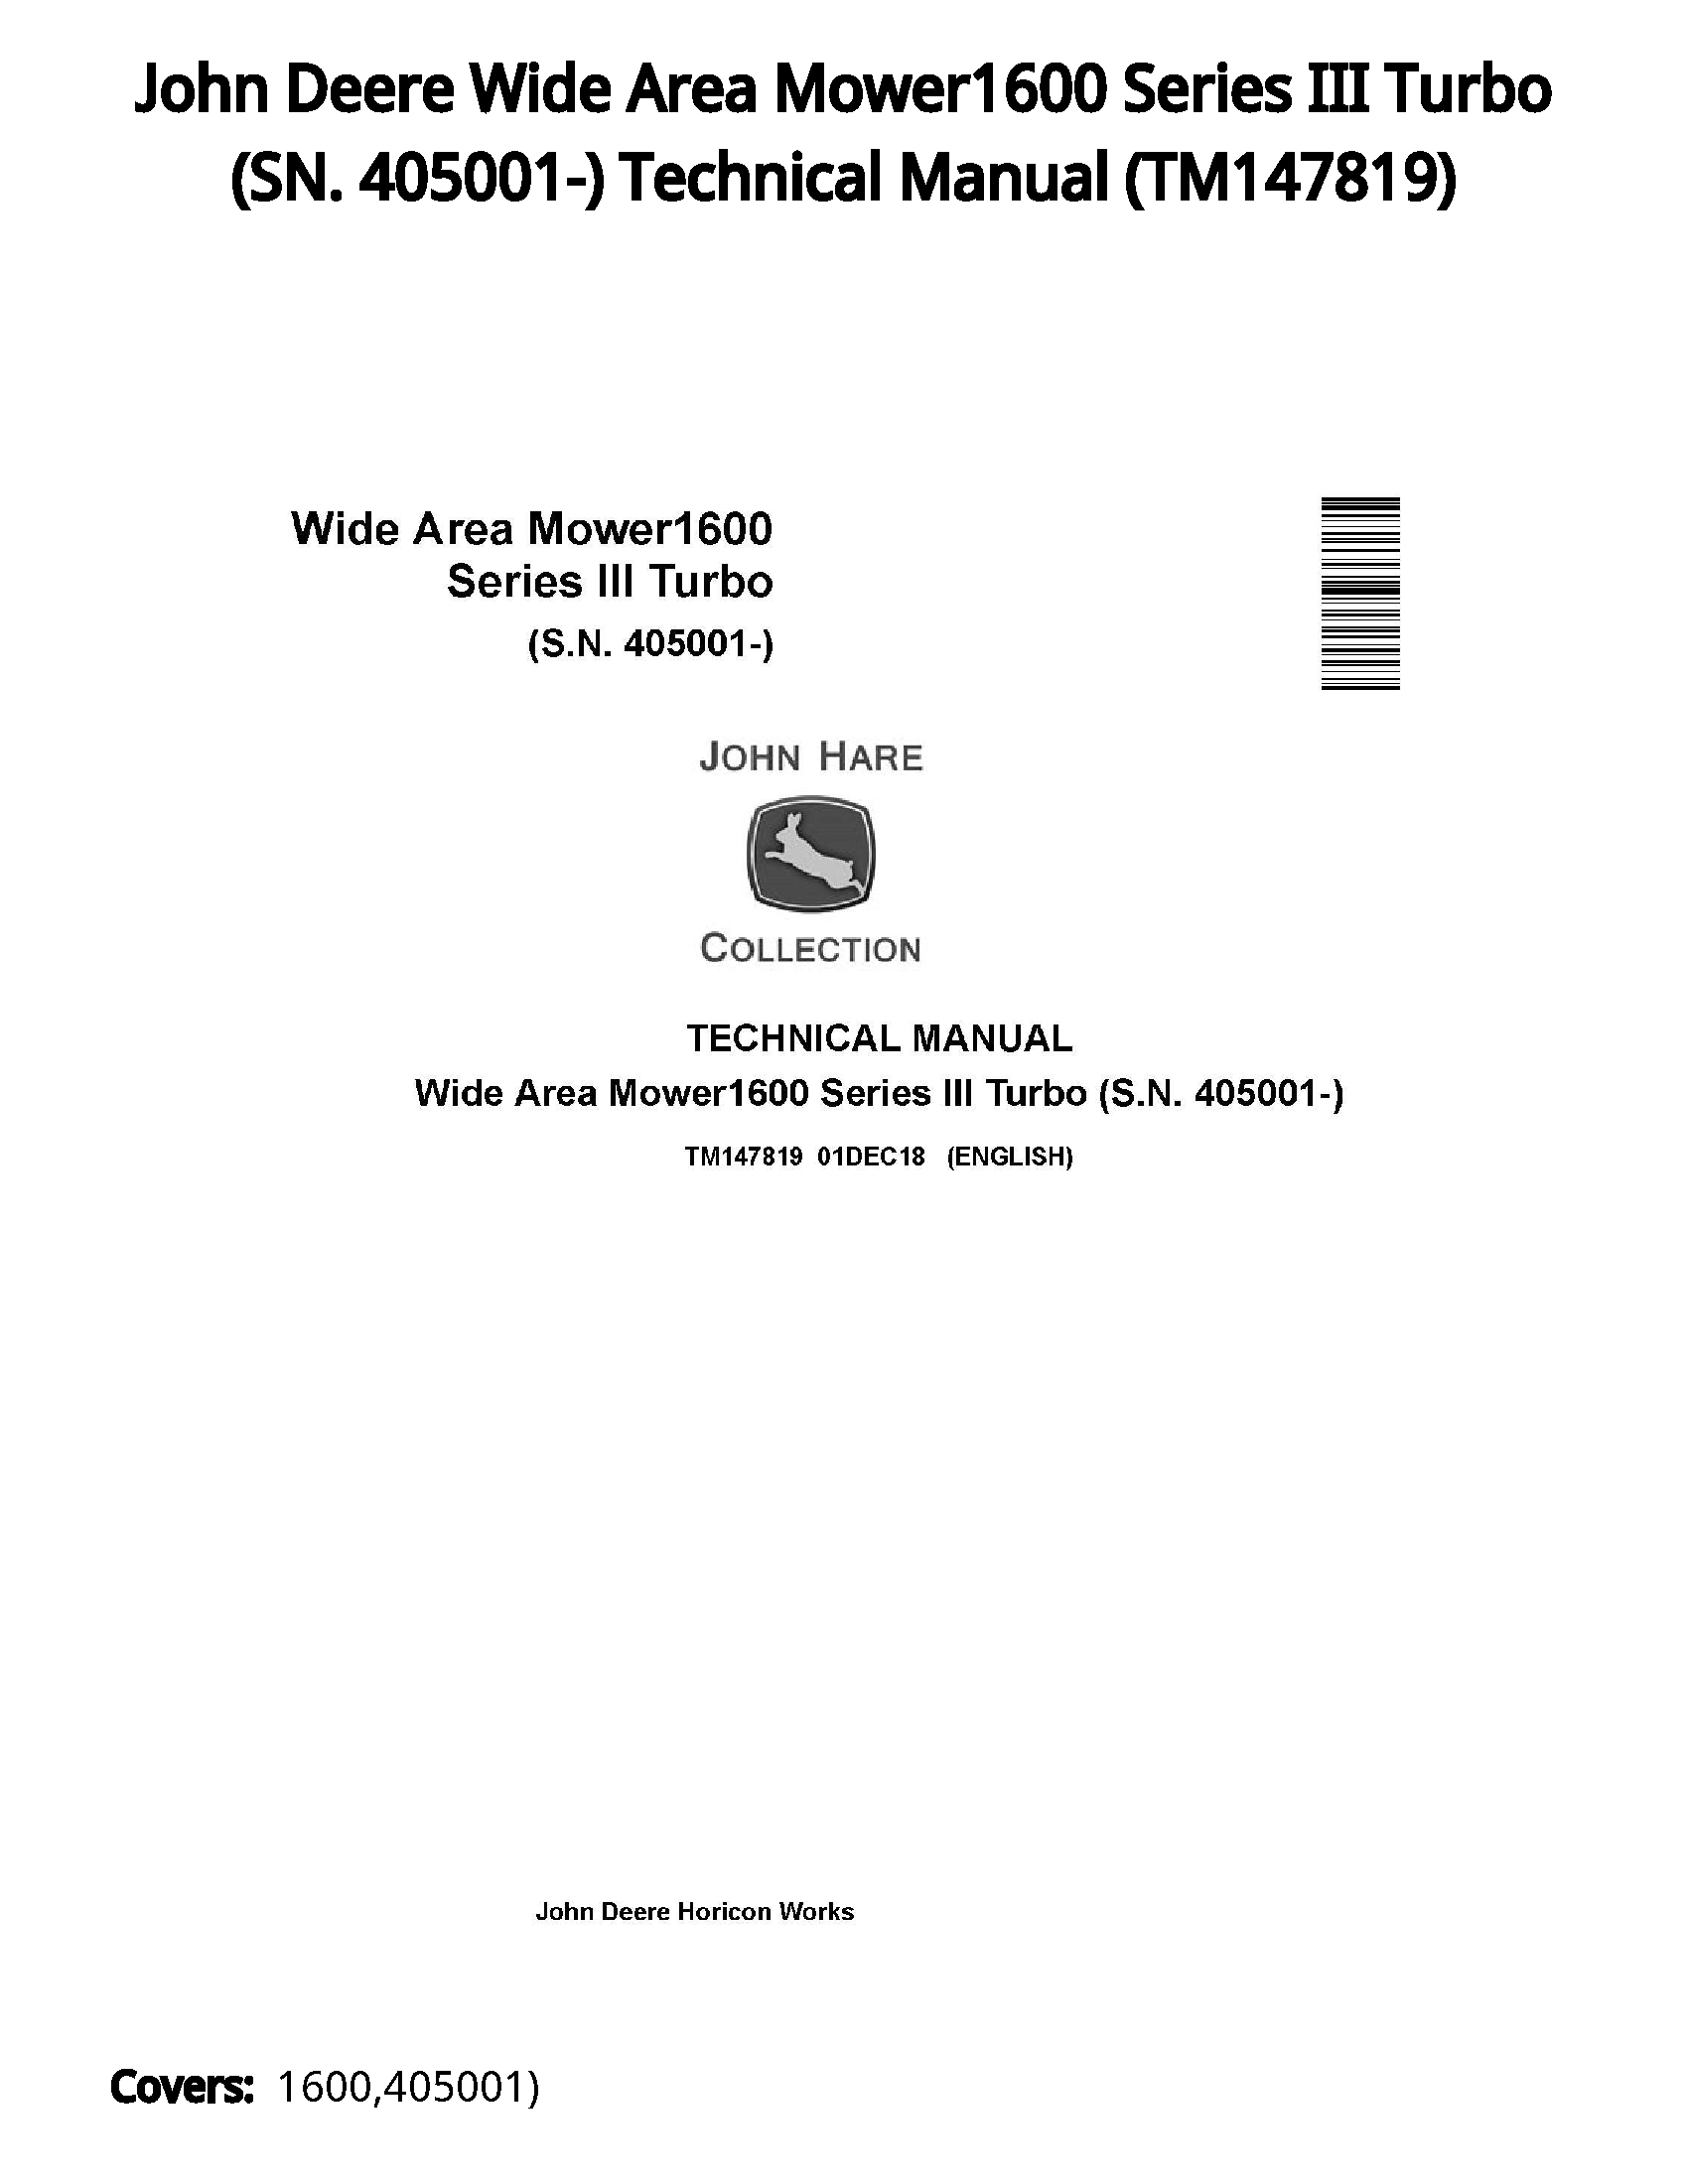 John Deere Wide Area Mower1600 Series III Turbo (SN. 405001-) Technical Manual - TM147819